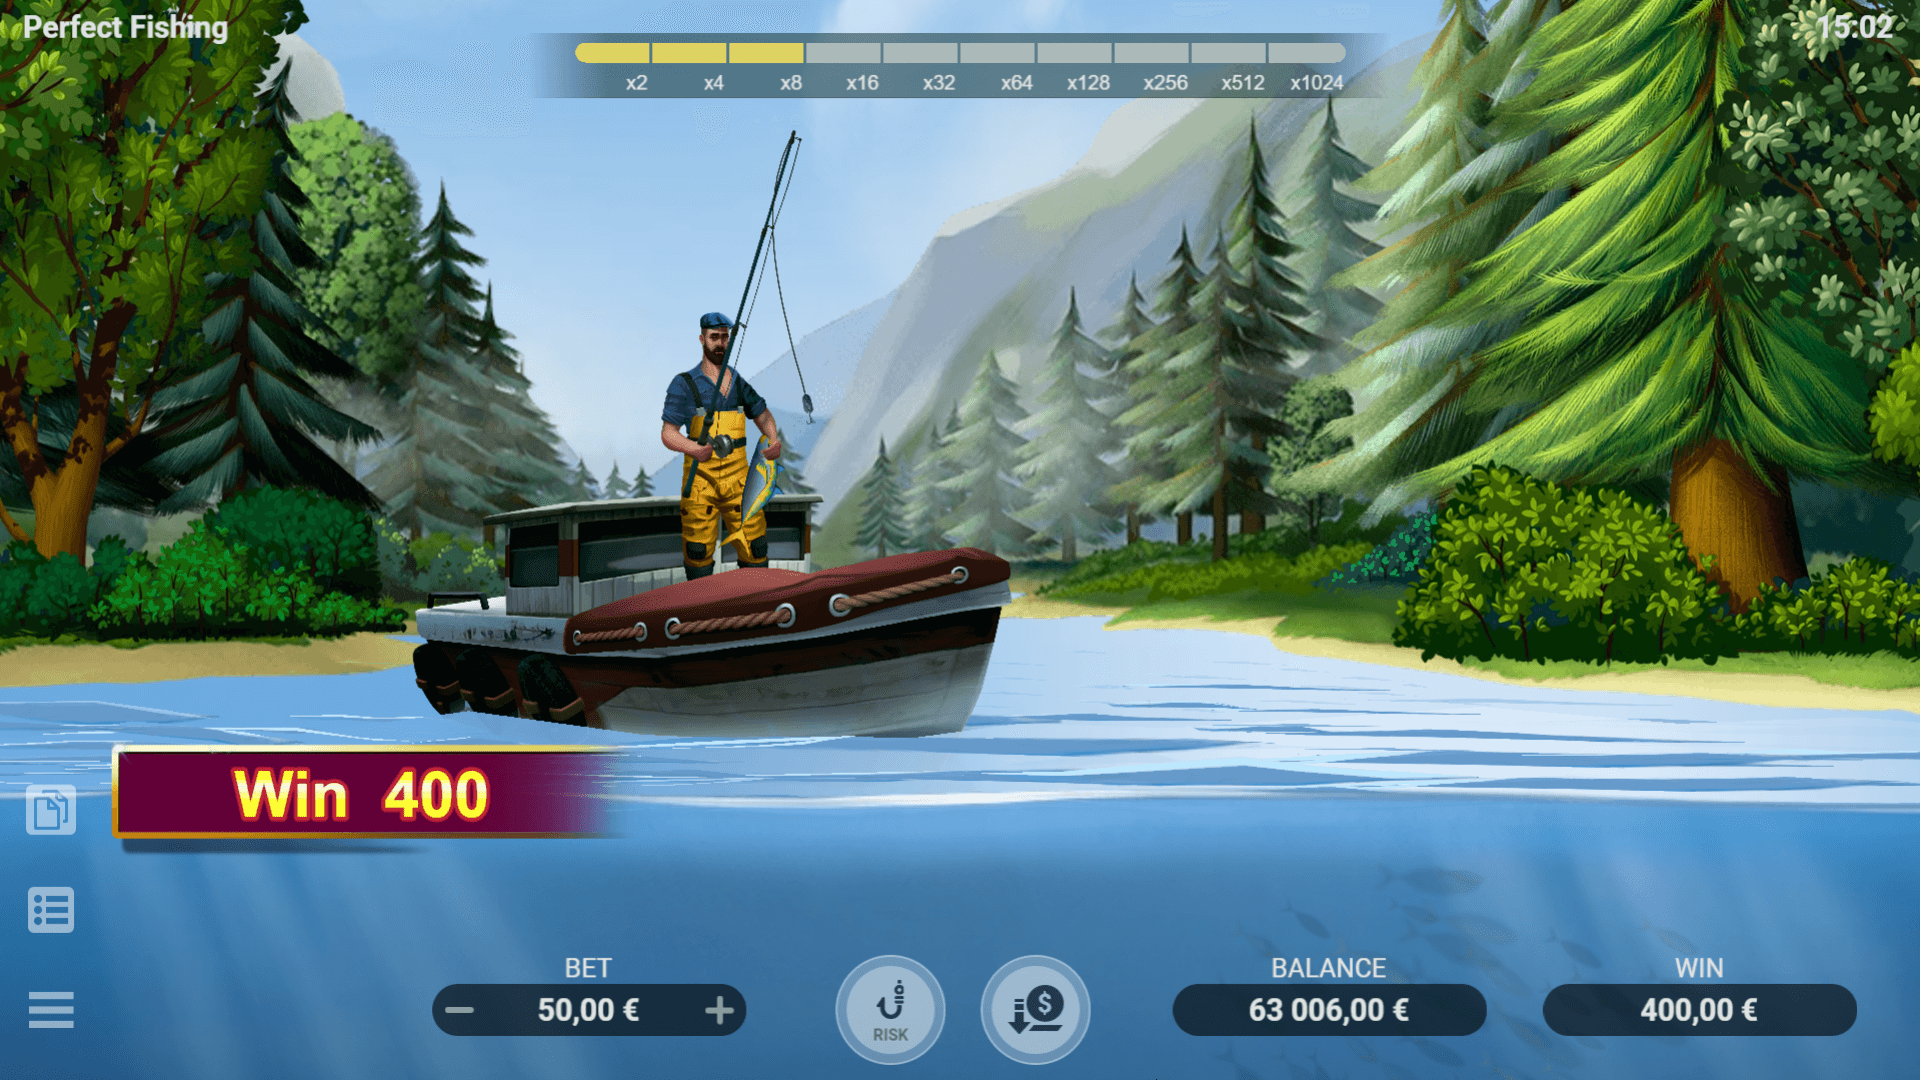 Perfect Fishing Evoplay slotxo168